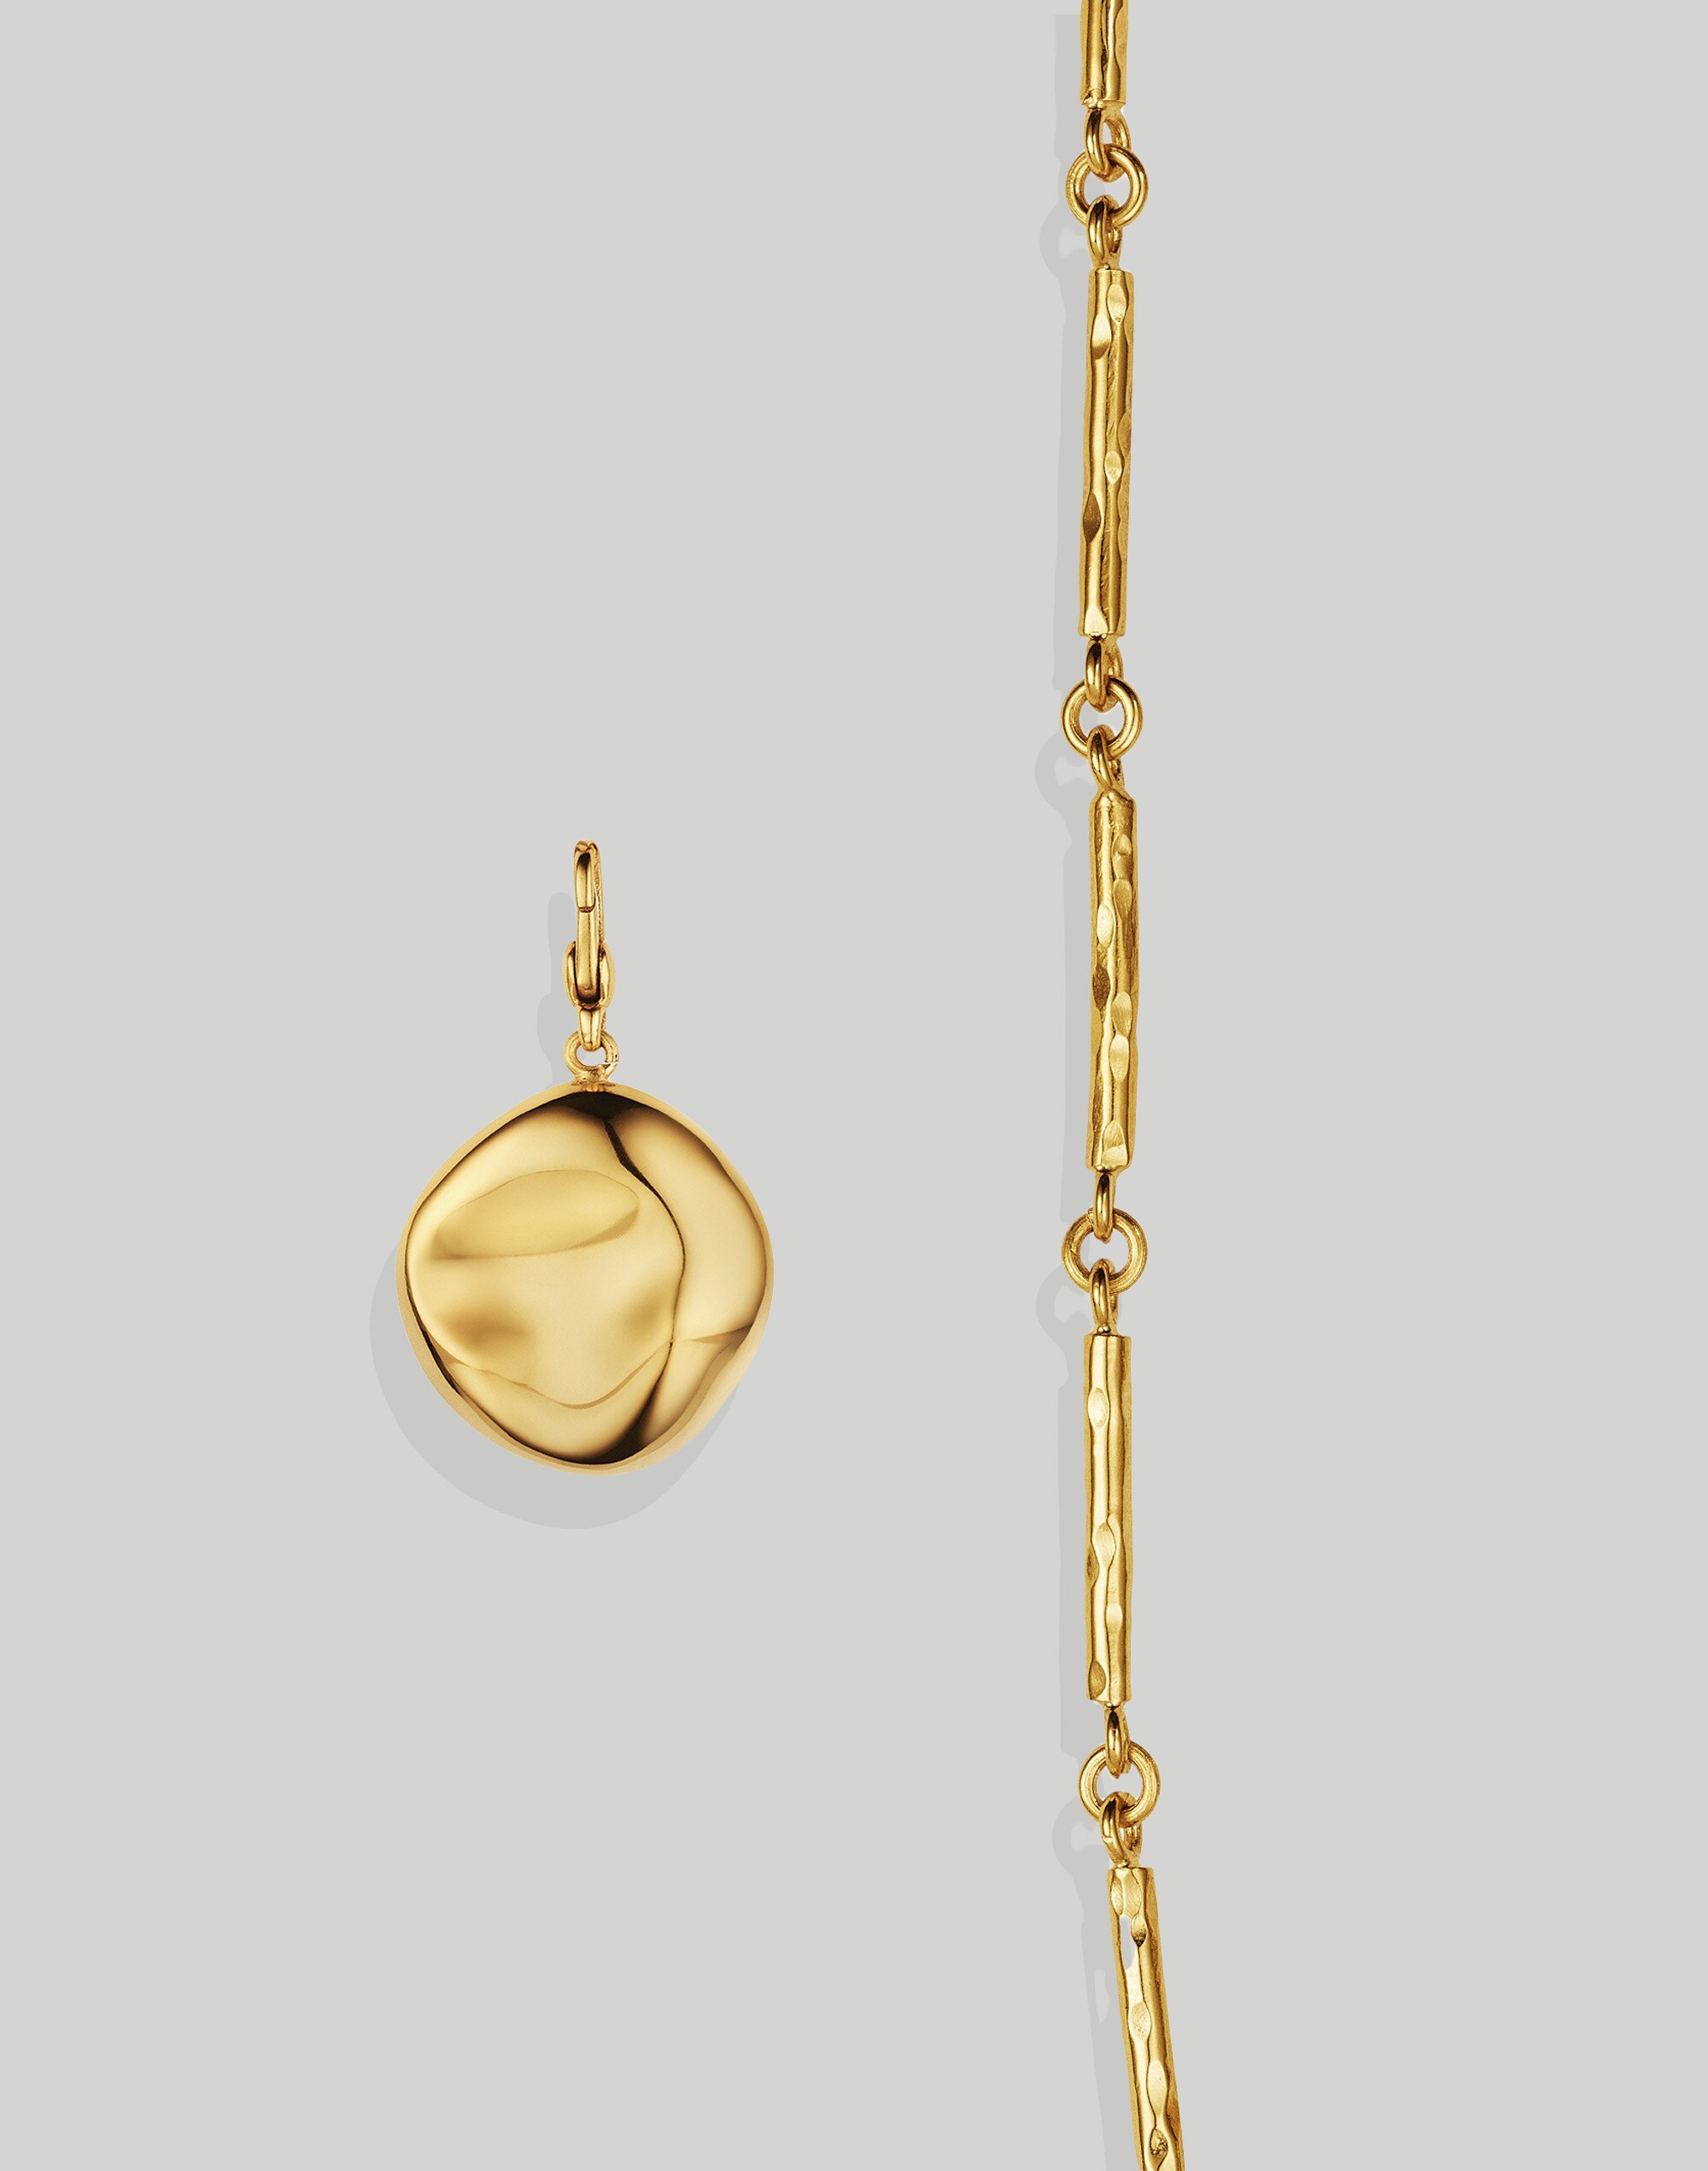 SOKO Bahari Necklace Charm & Nyundo Chain Necklace Set